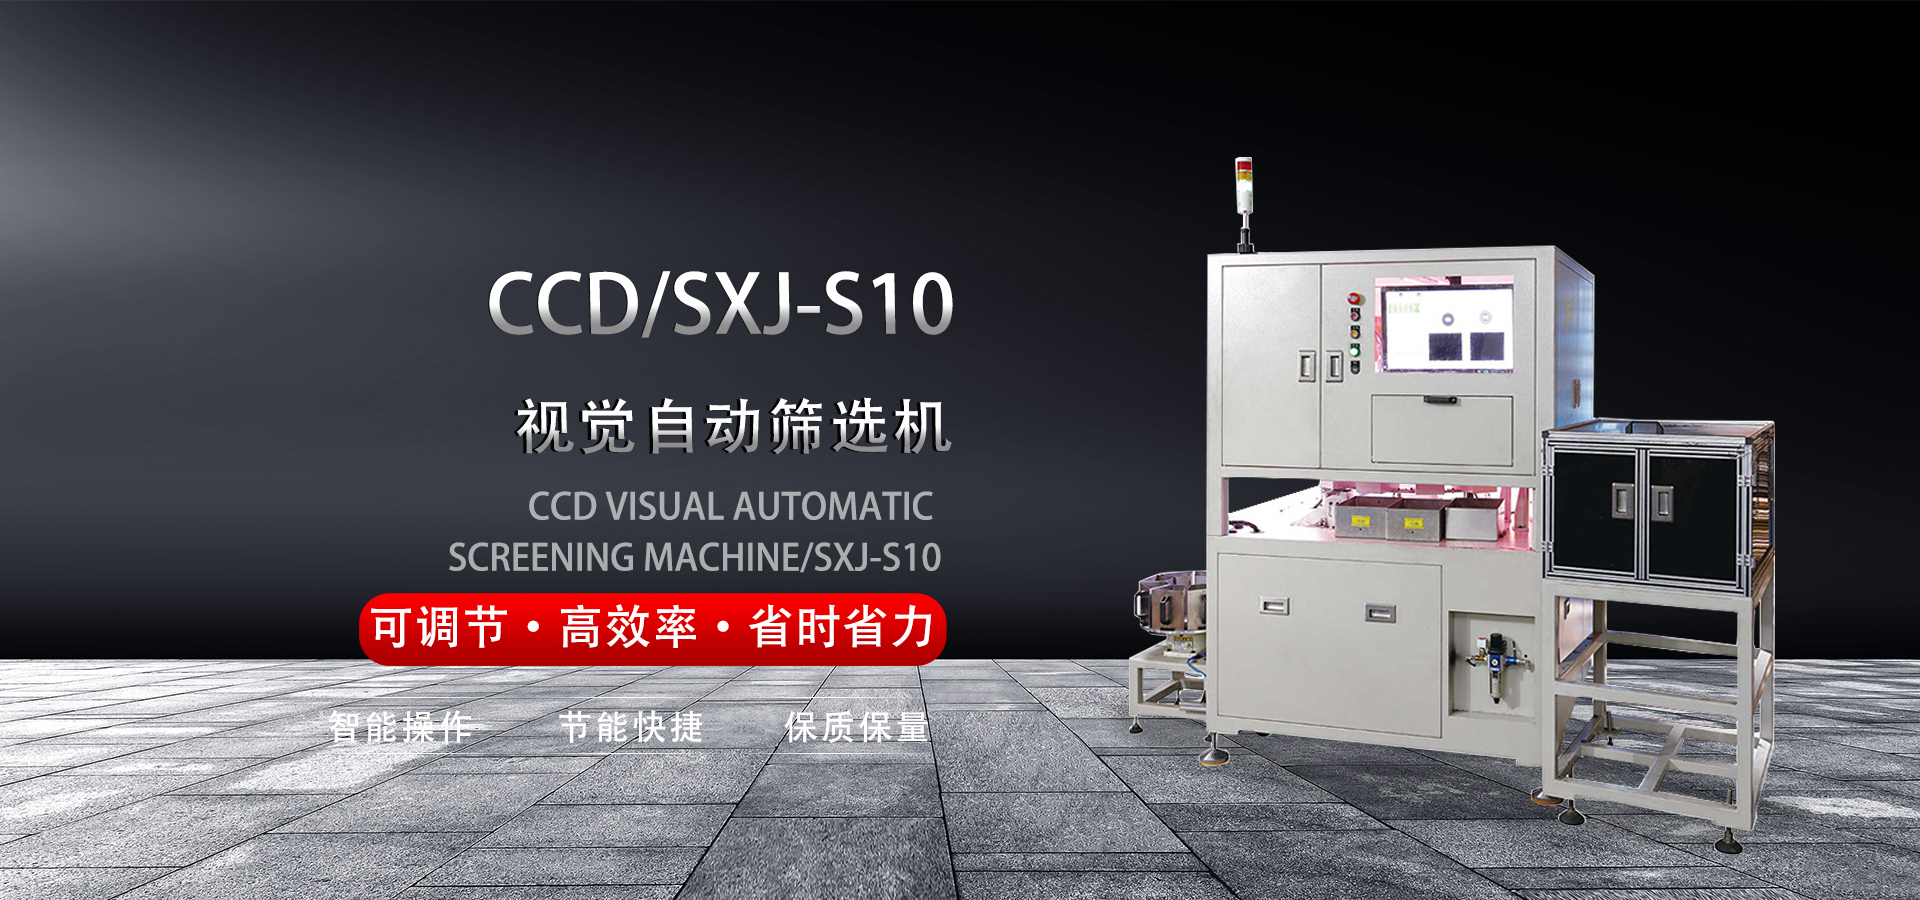 CCD视觉自动筛选机/SXJ-S10